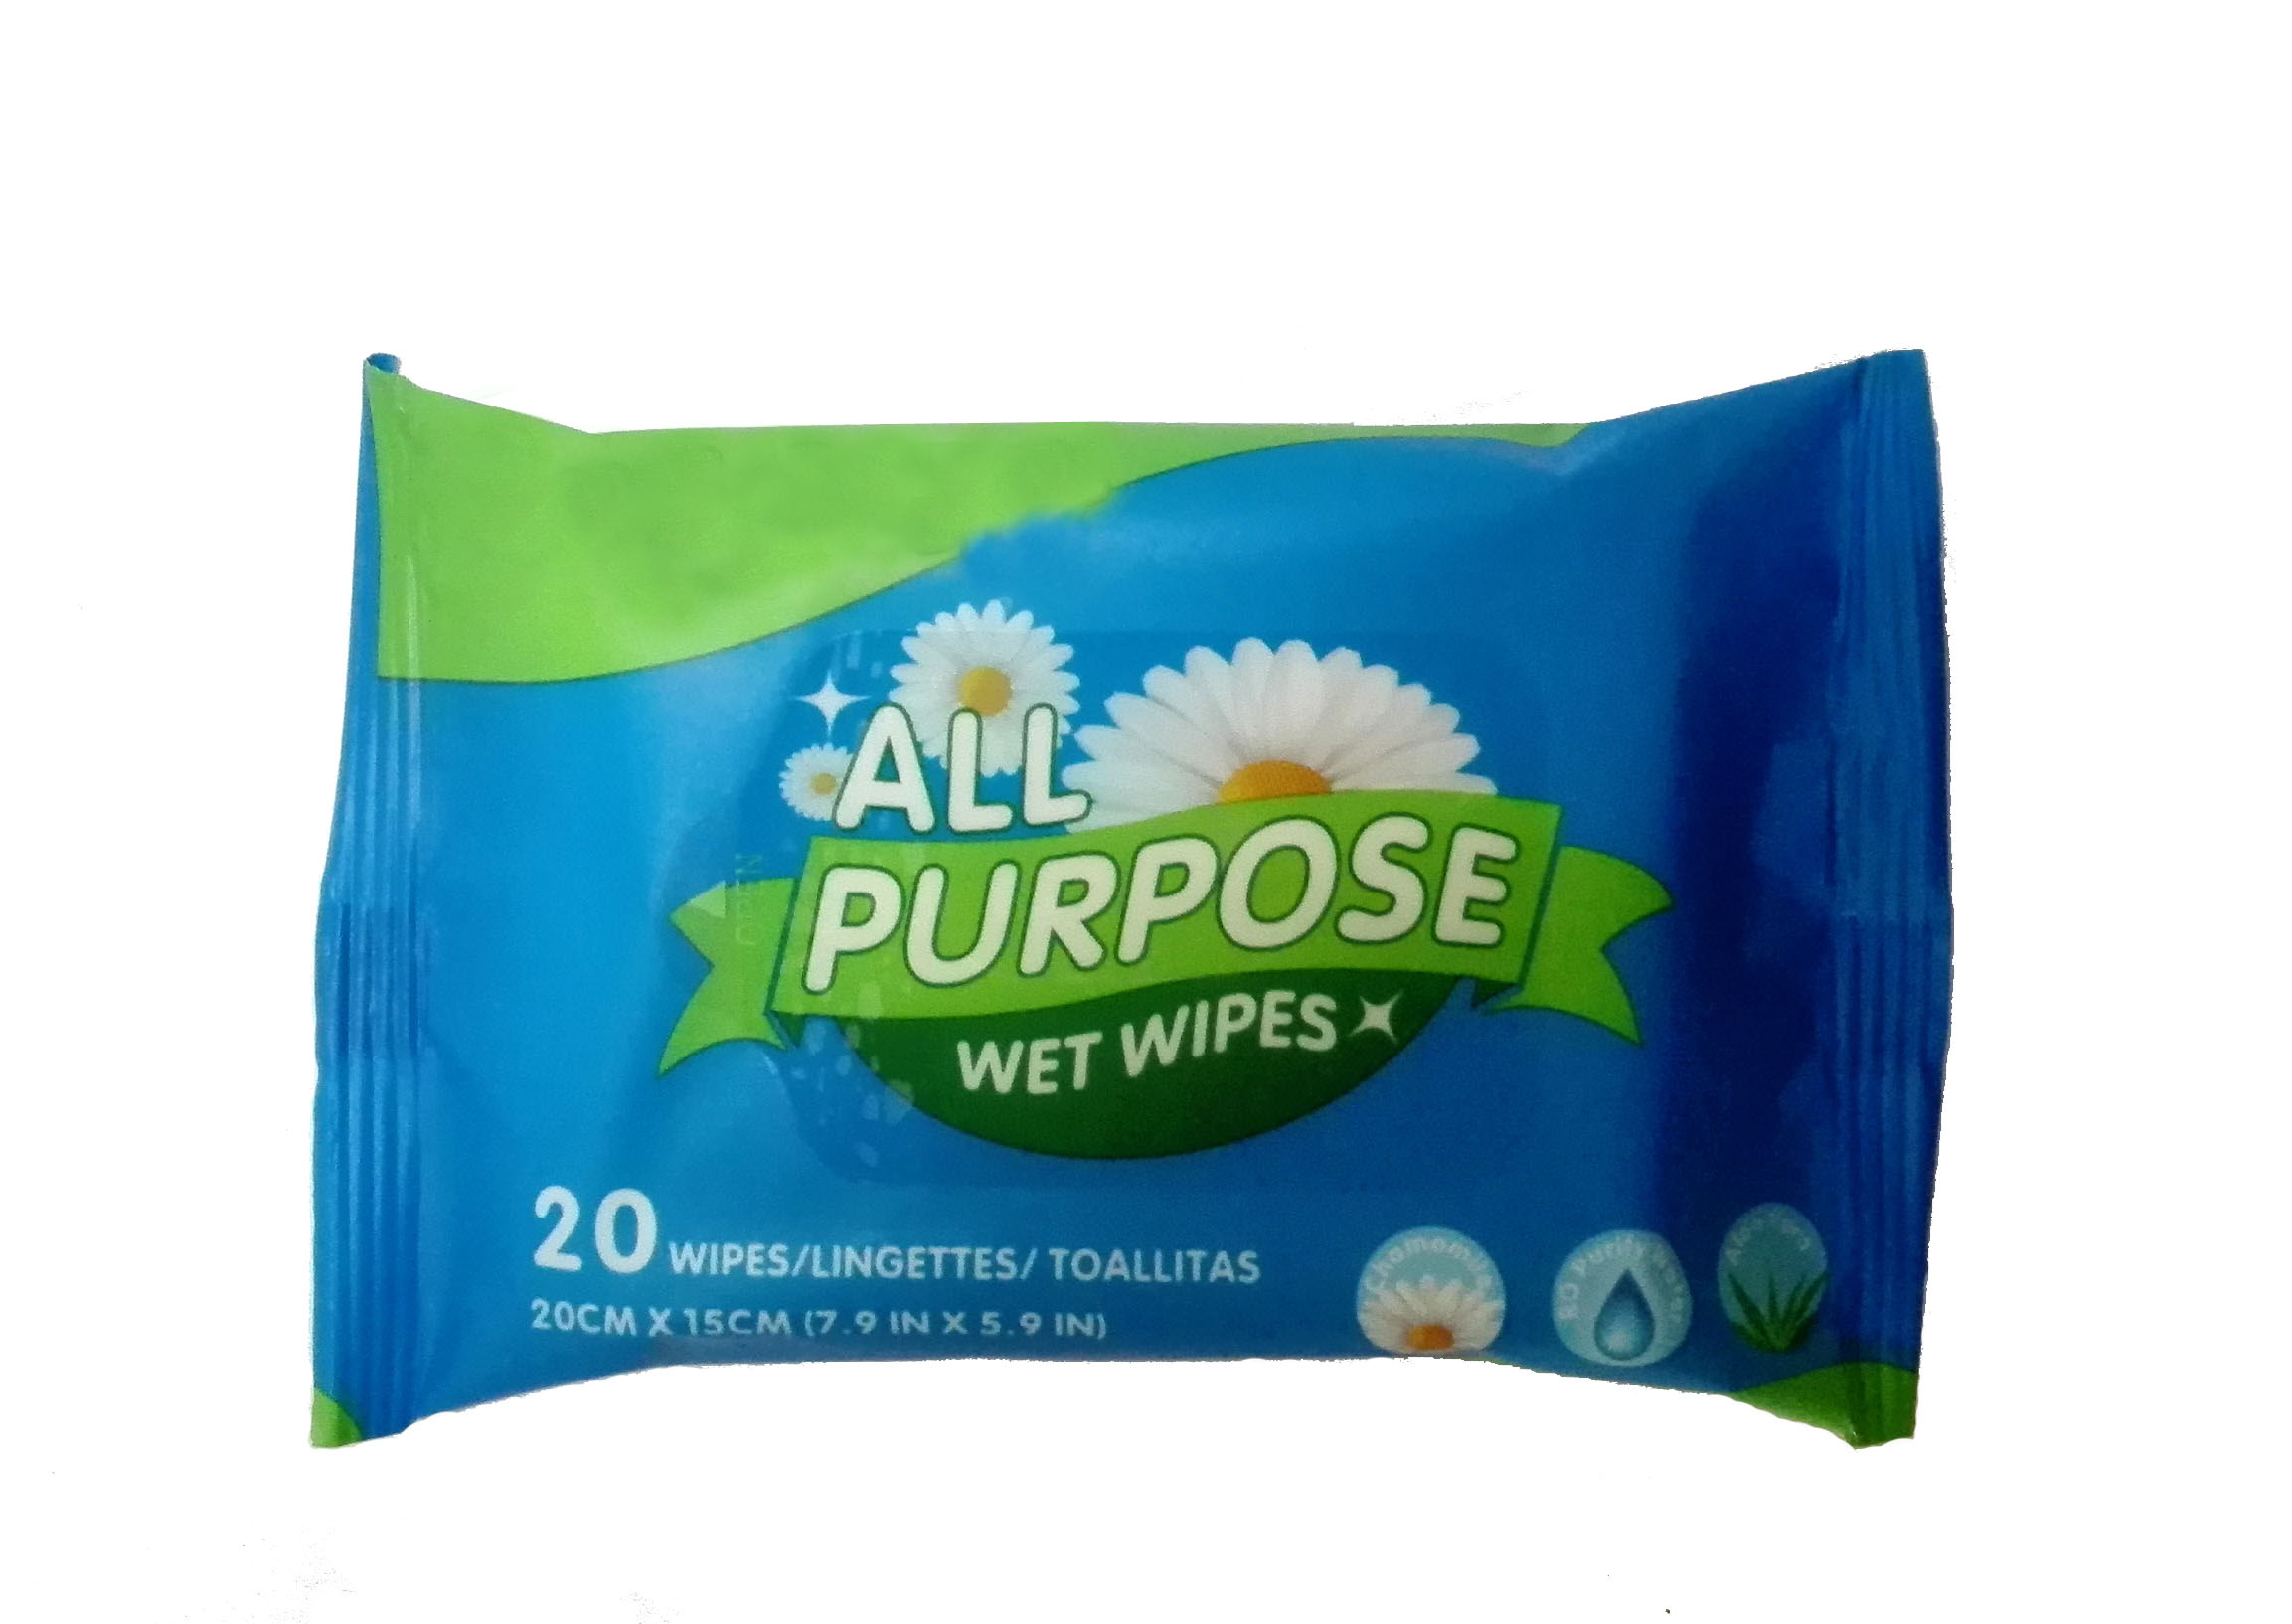 Antibacterial Hygiene wipes with aloe vera